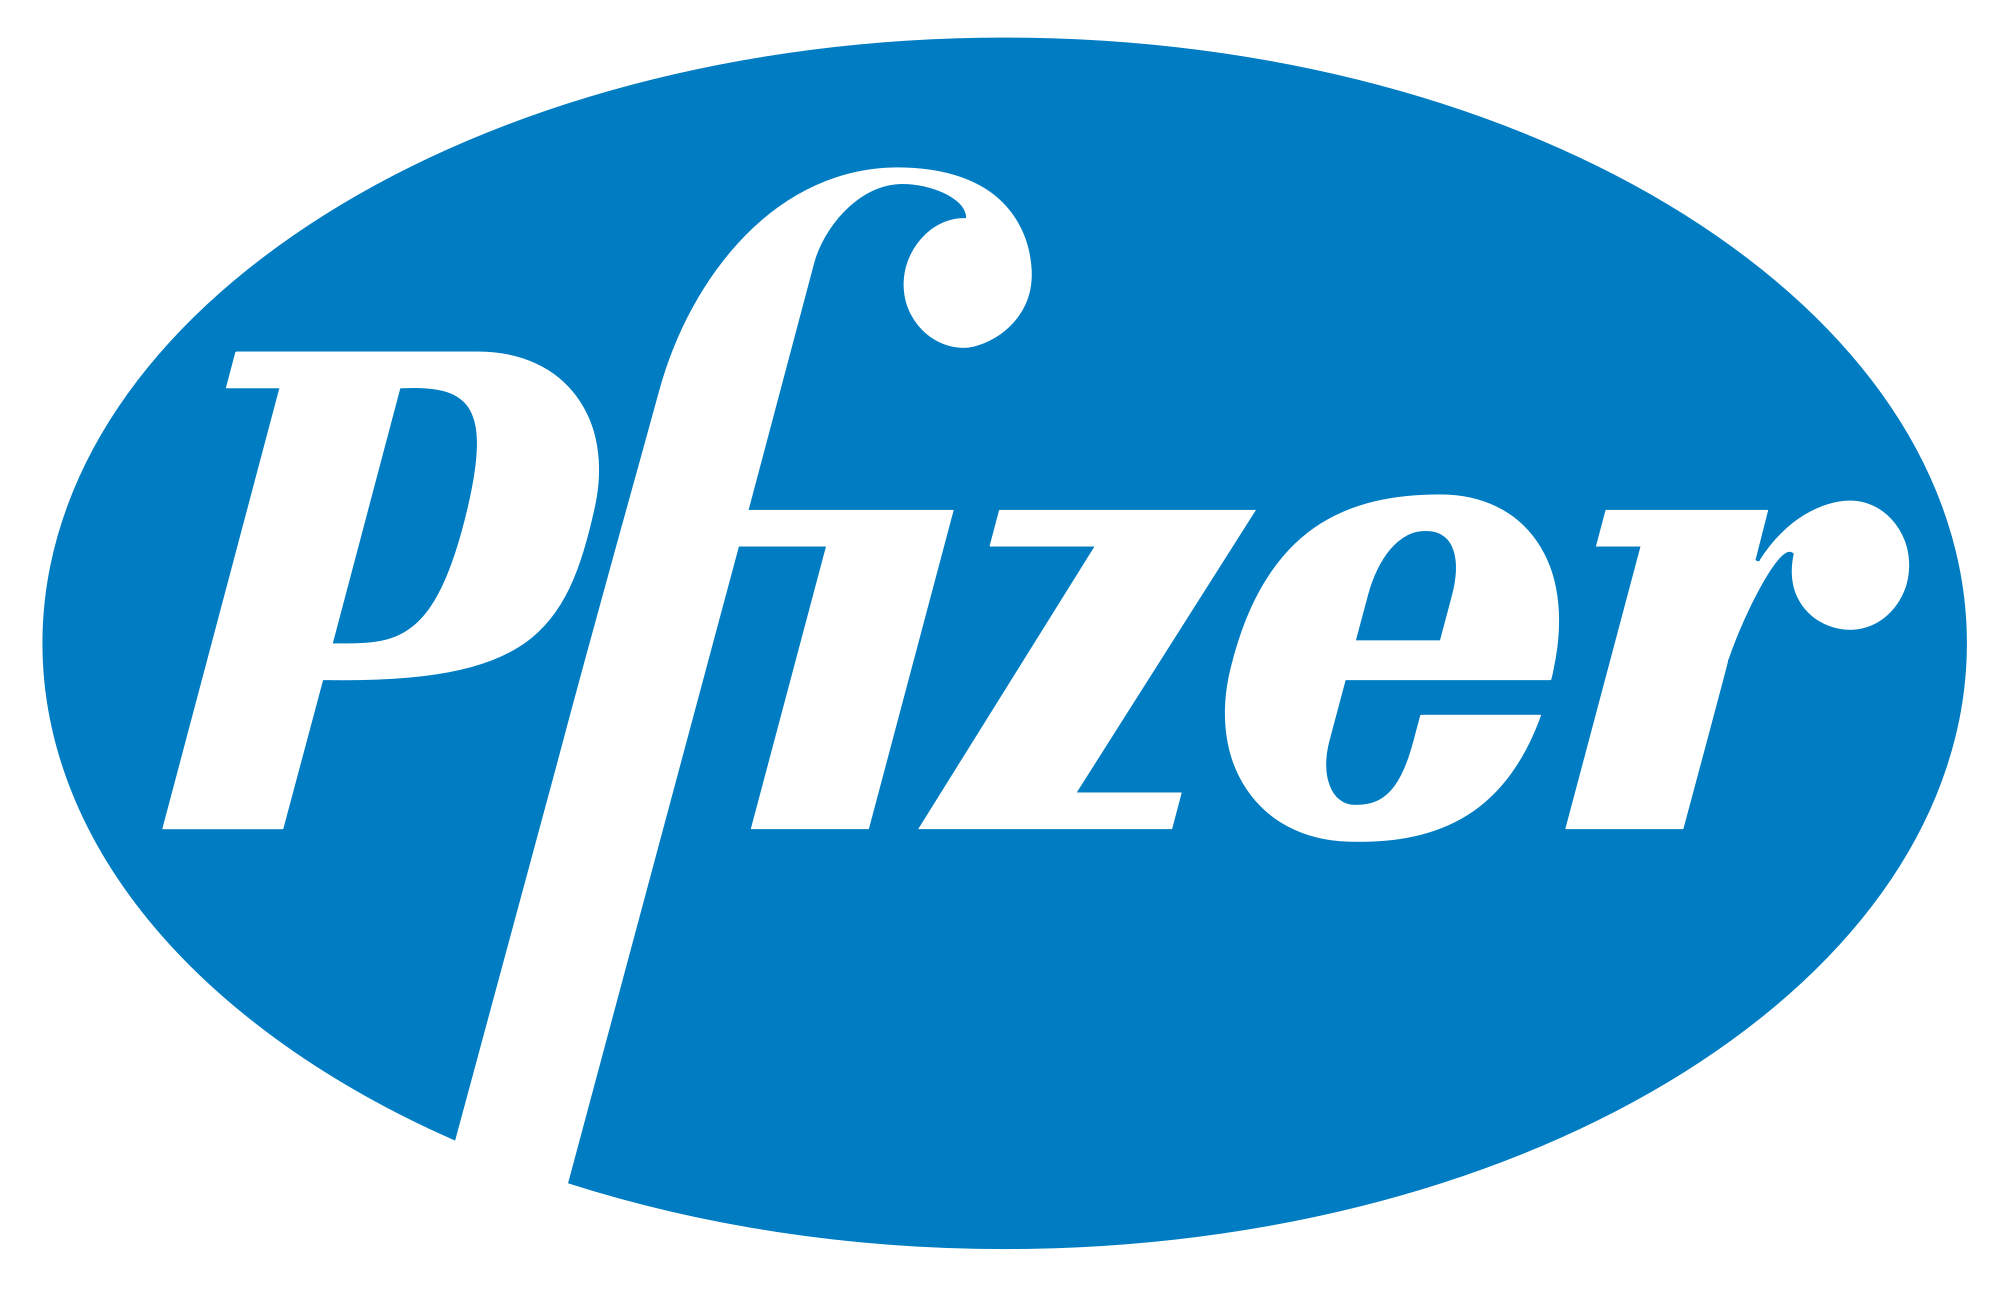 2000px-Pfizer_logo.svg.png